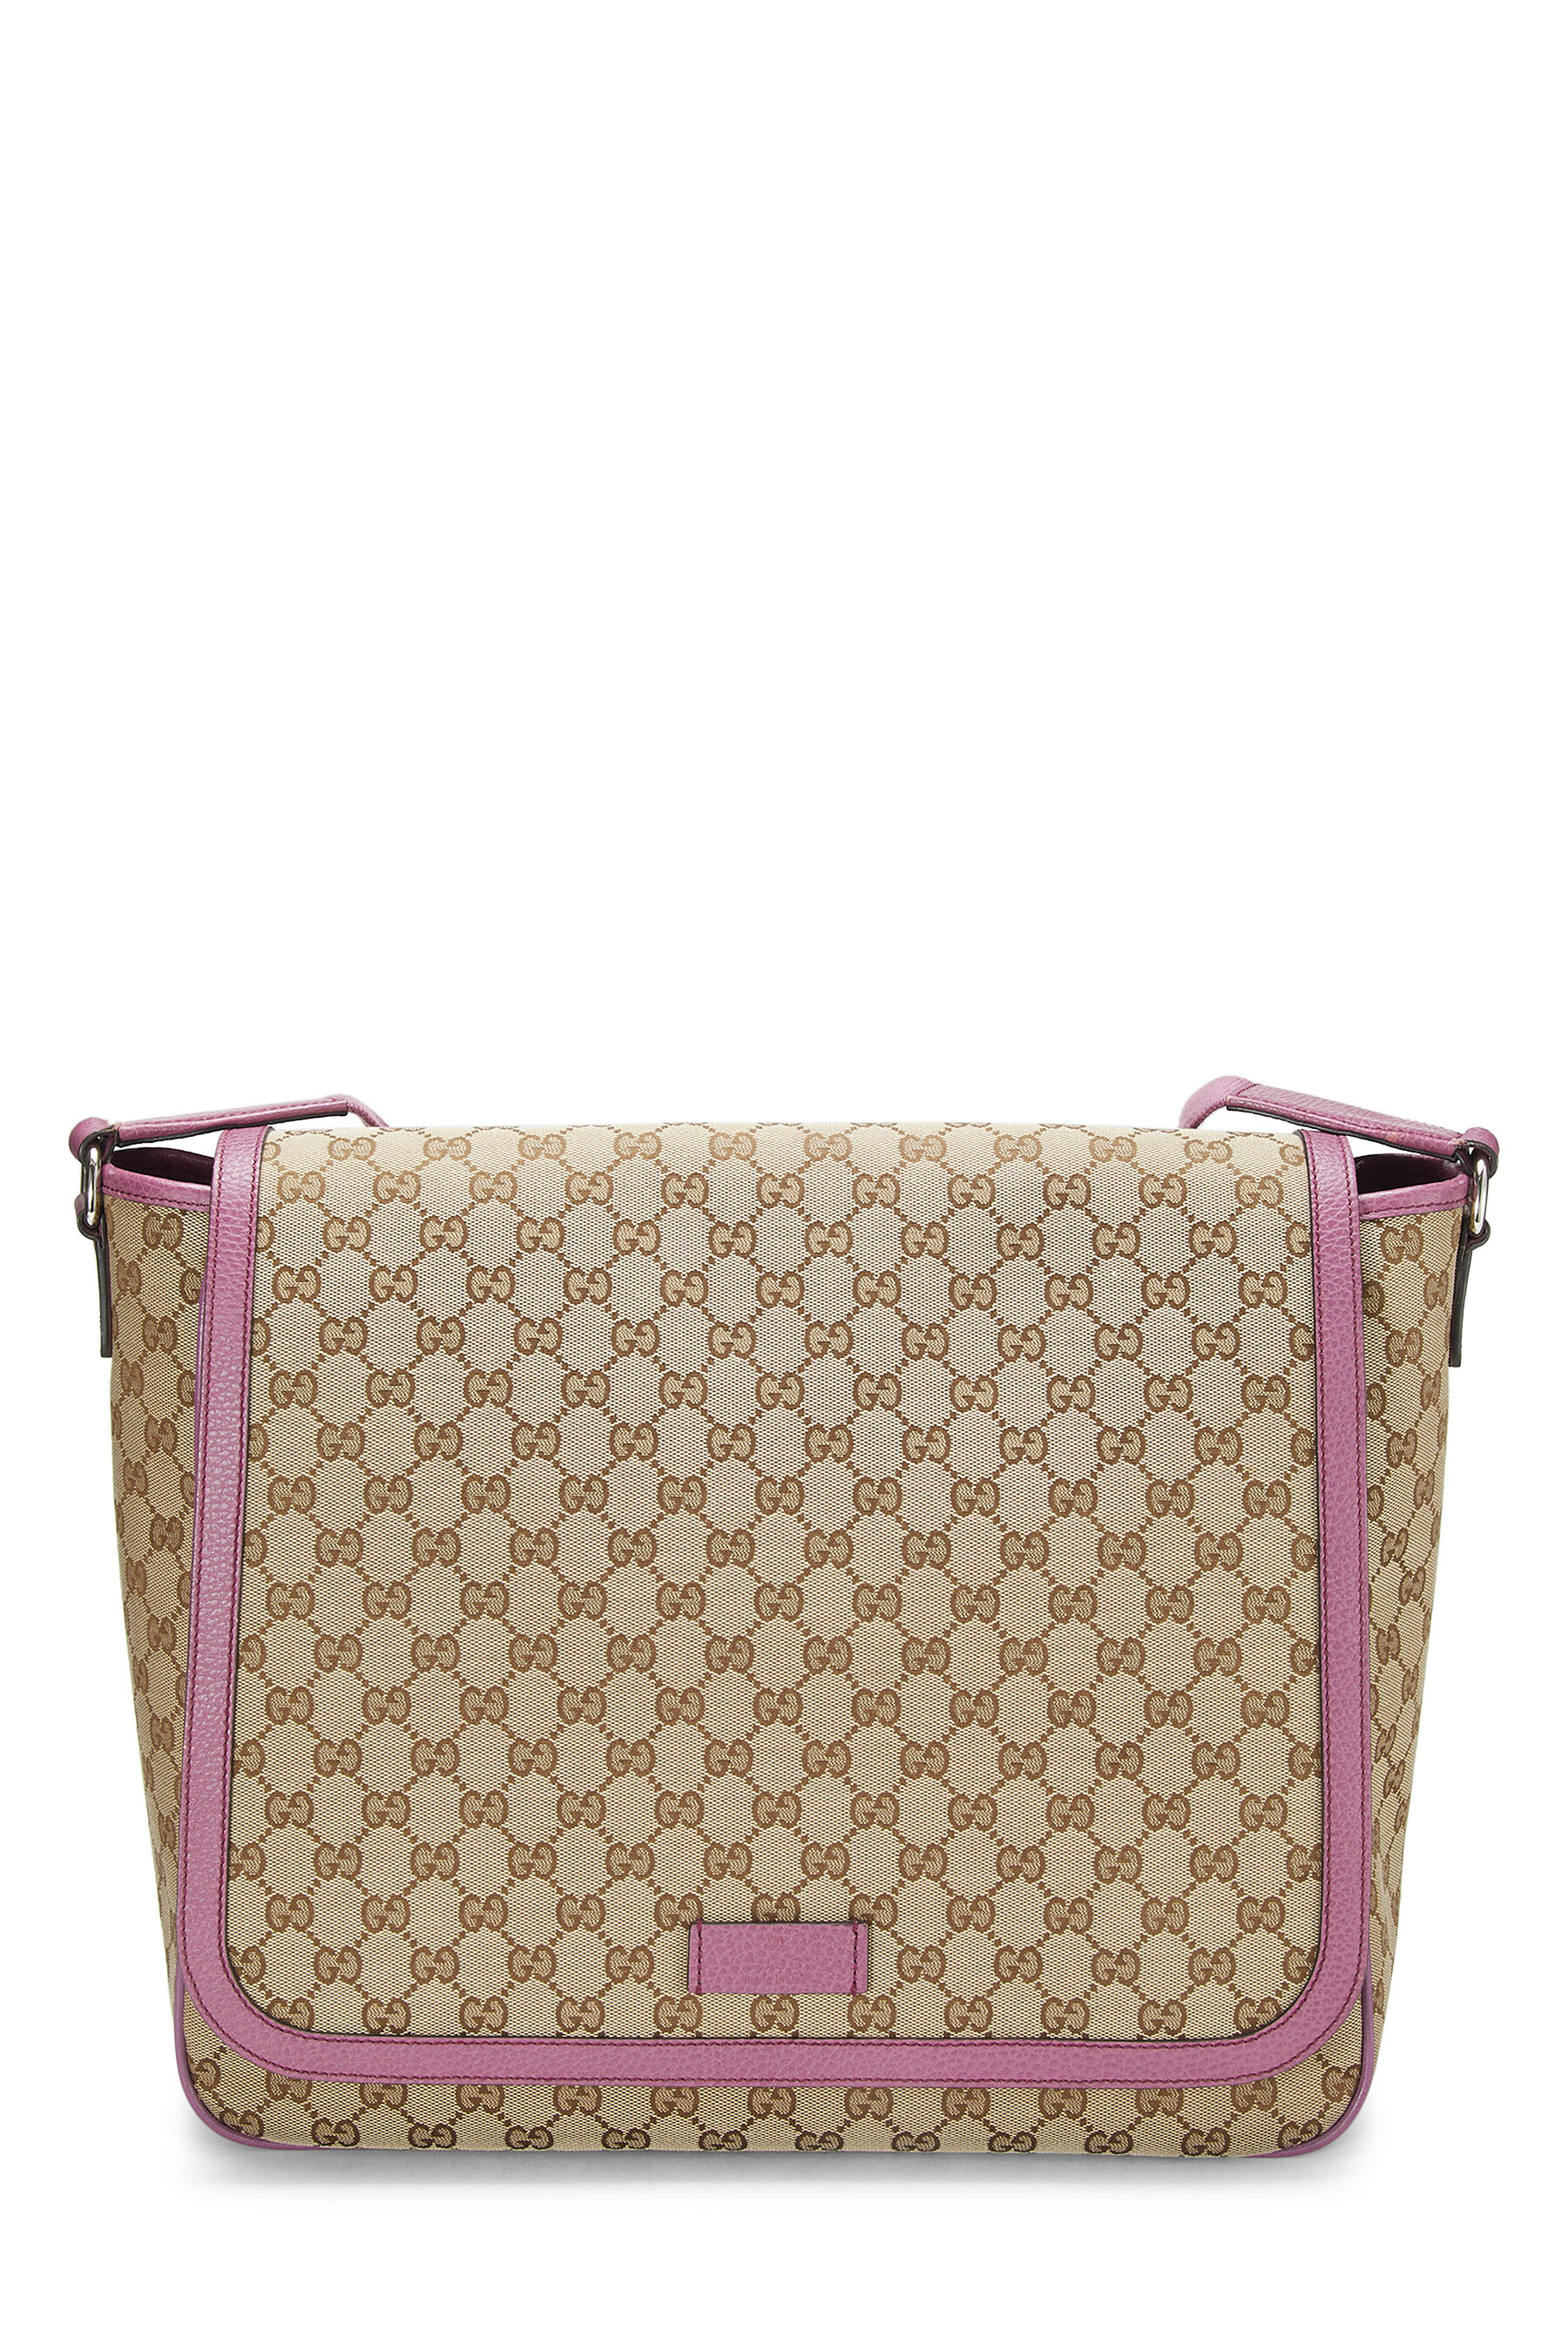 Gucci Rose Bud Zip Pink Print GG Canvas Diaper Bag Beige Girl Baby